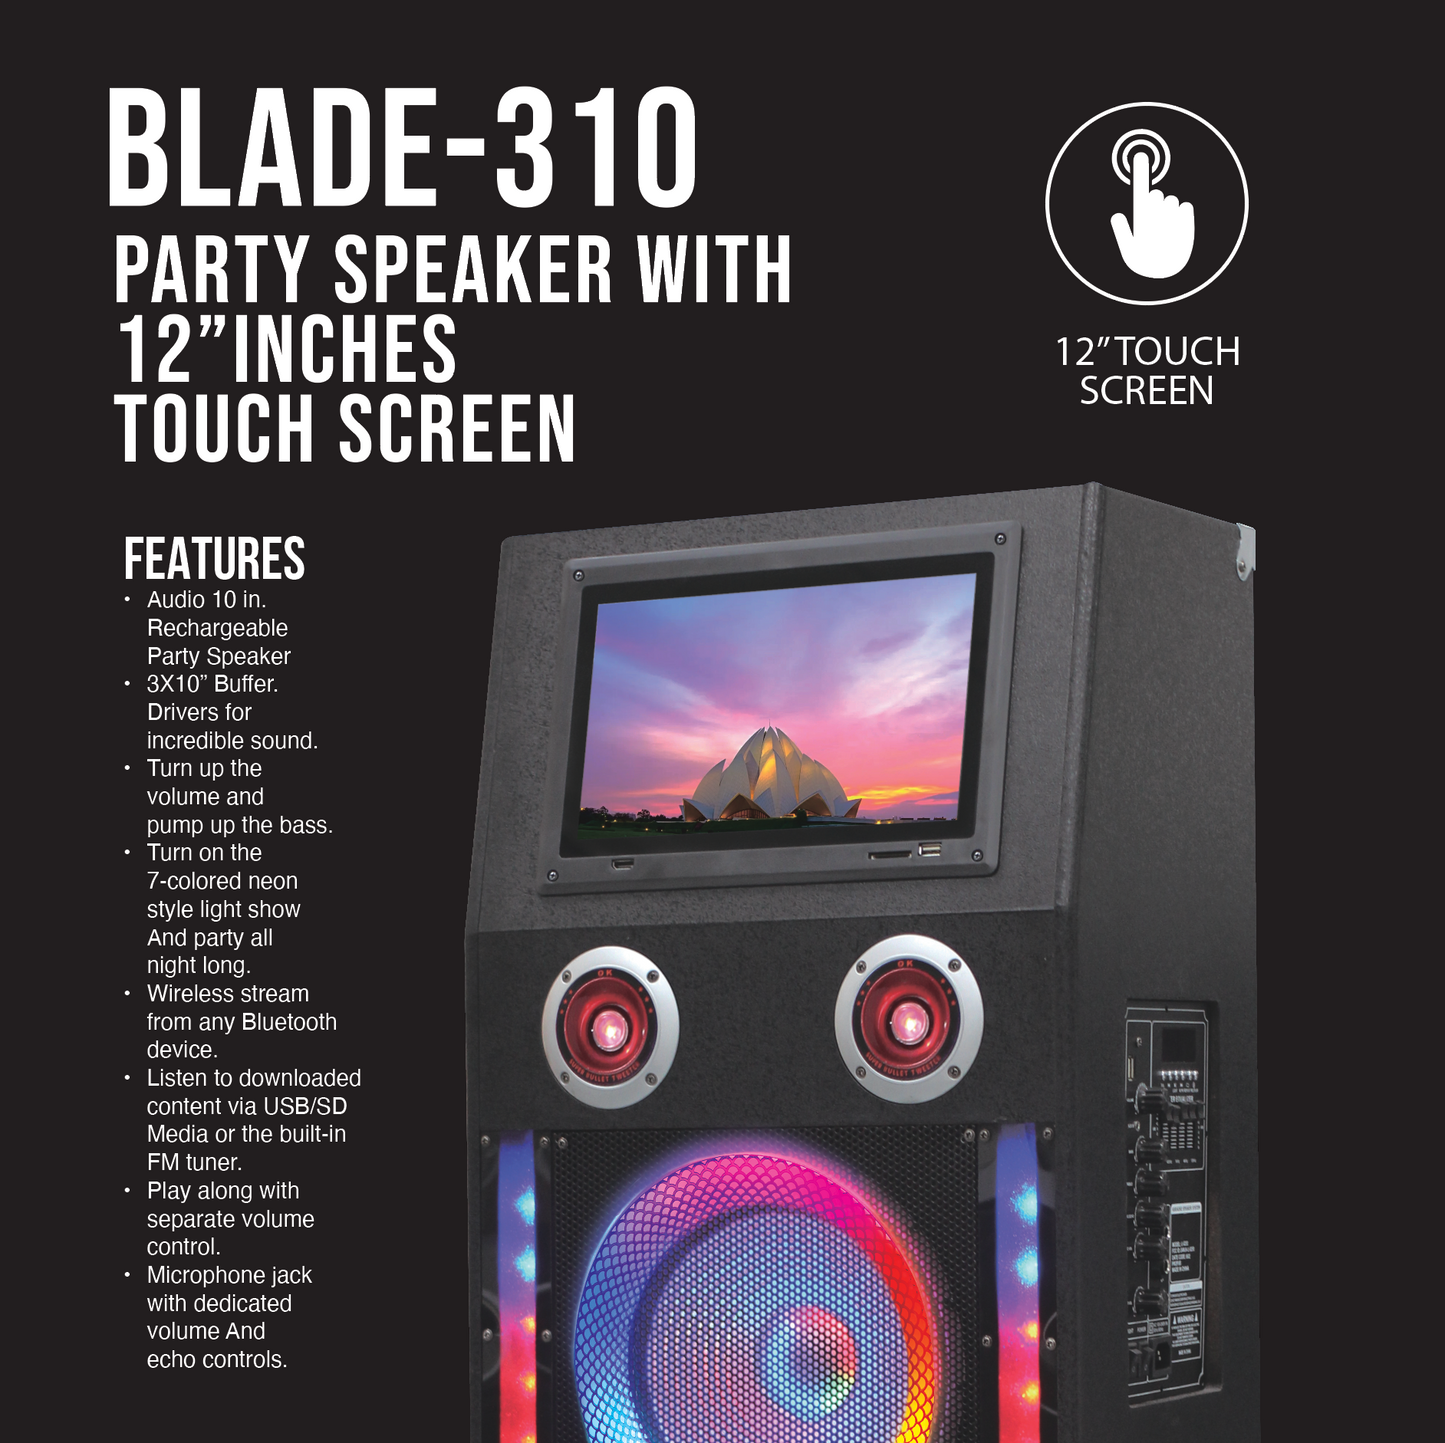 Blade-310 Party Speaker